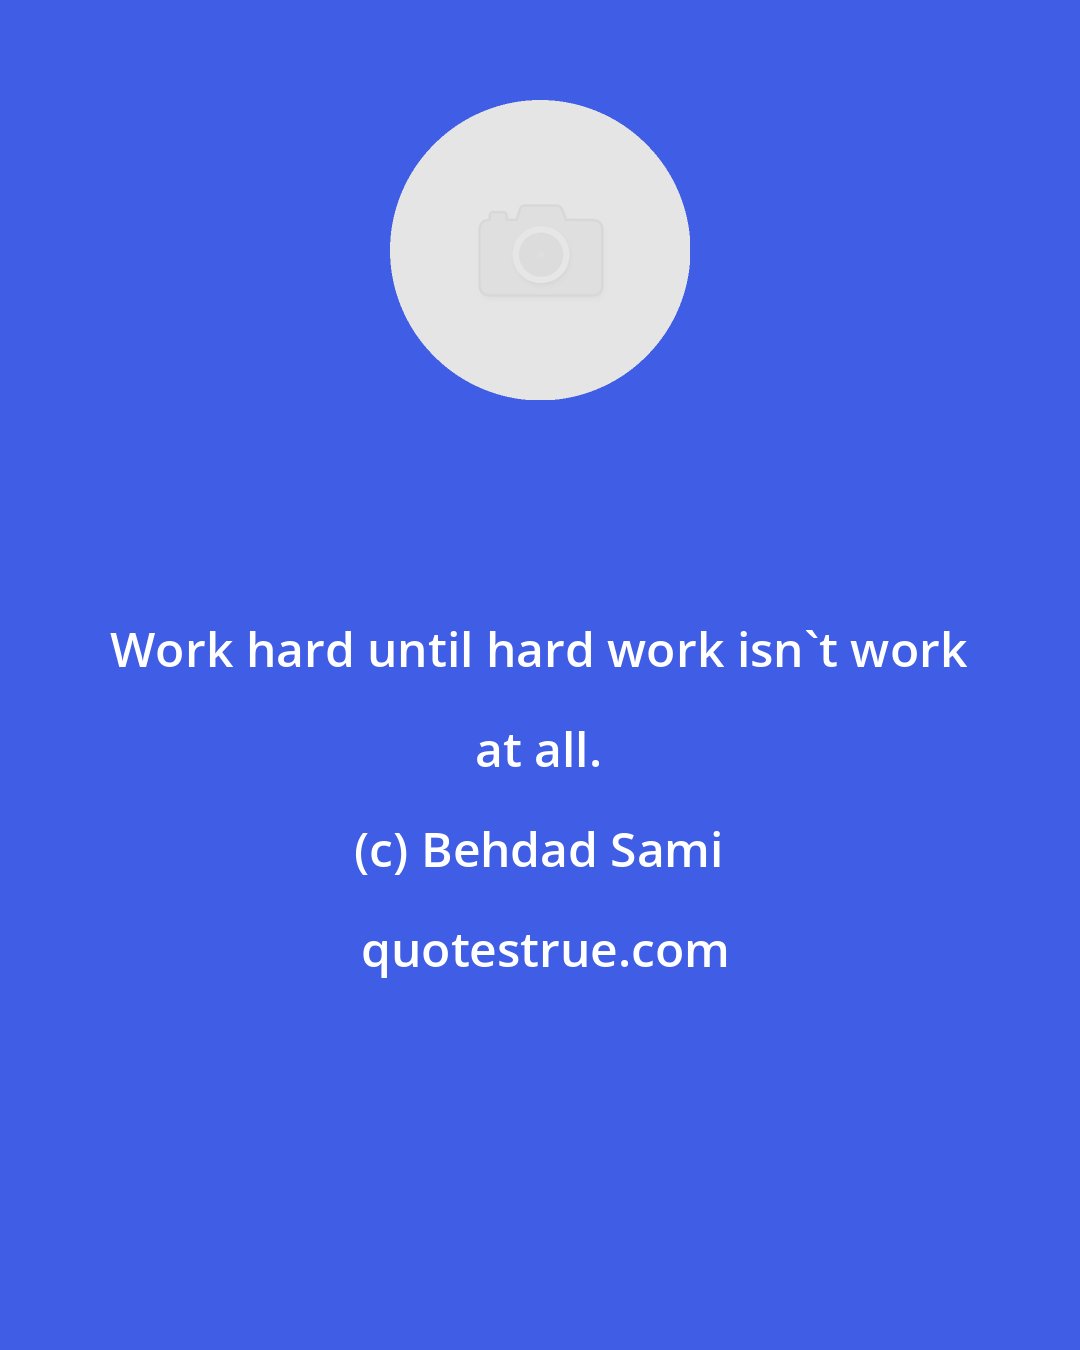 Behdad Sami: Work hard until hard work isn't work at all.